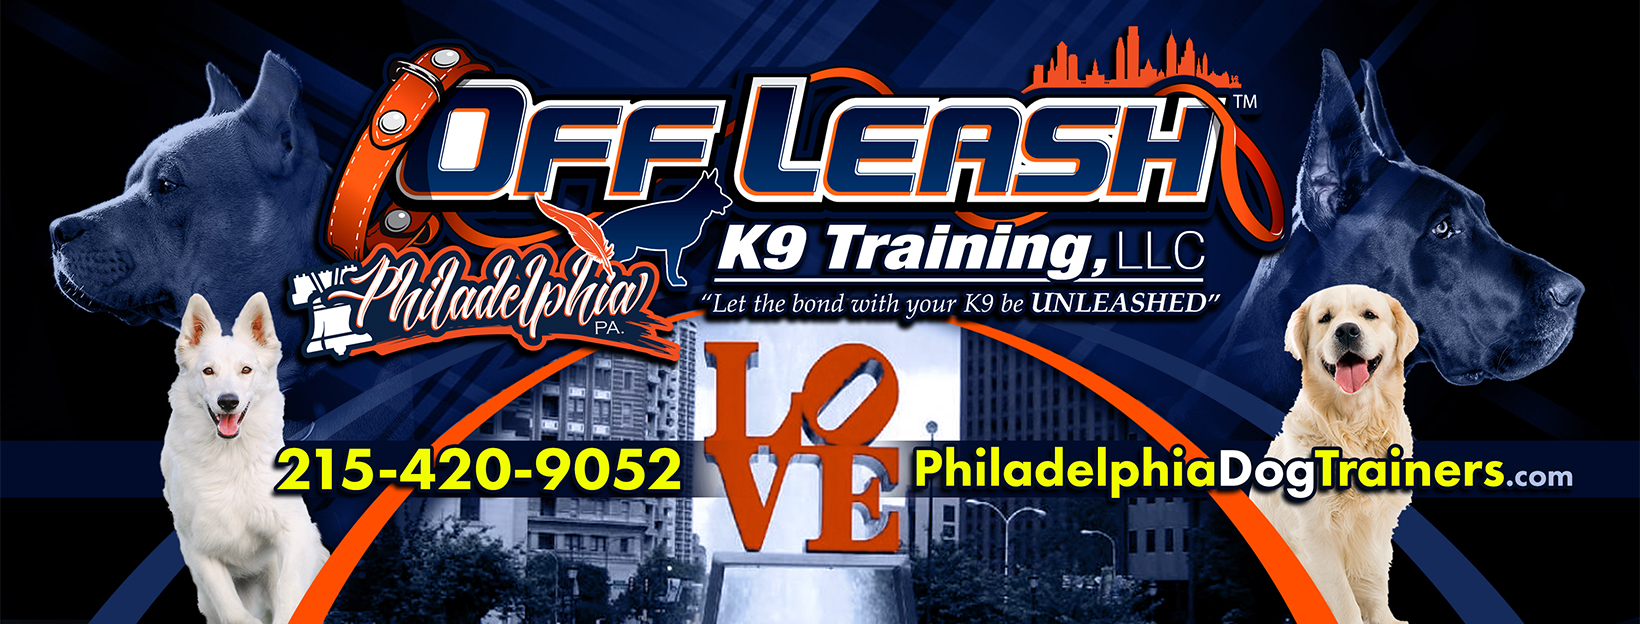 Off Leash K9 Training Philadelphia, LLC